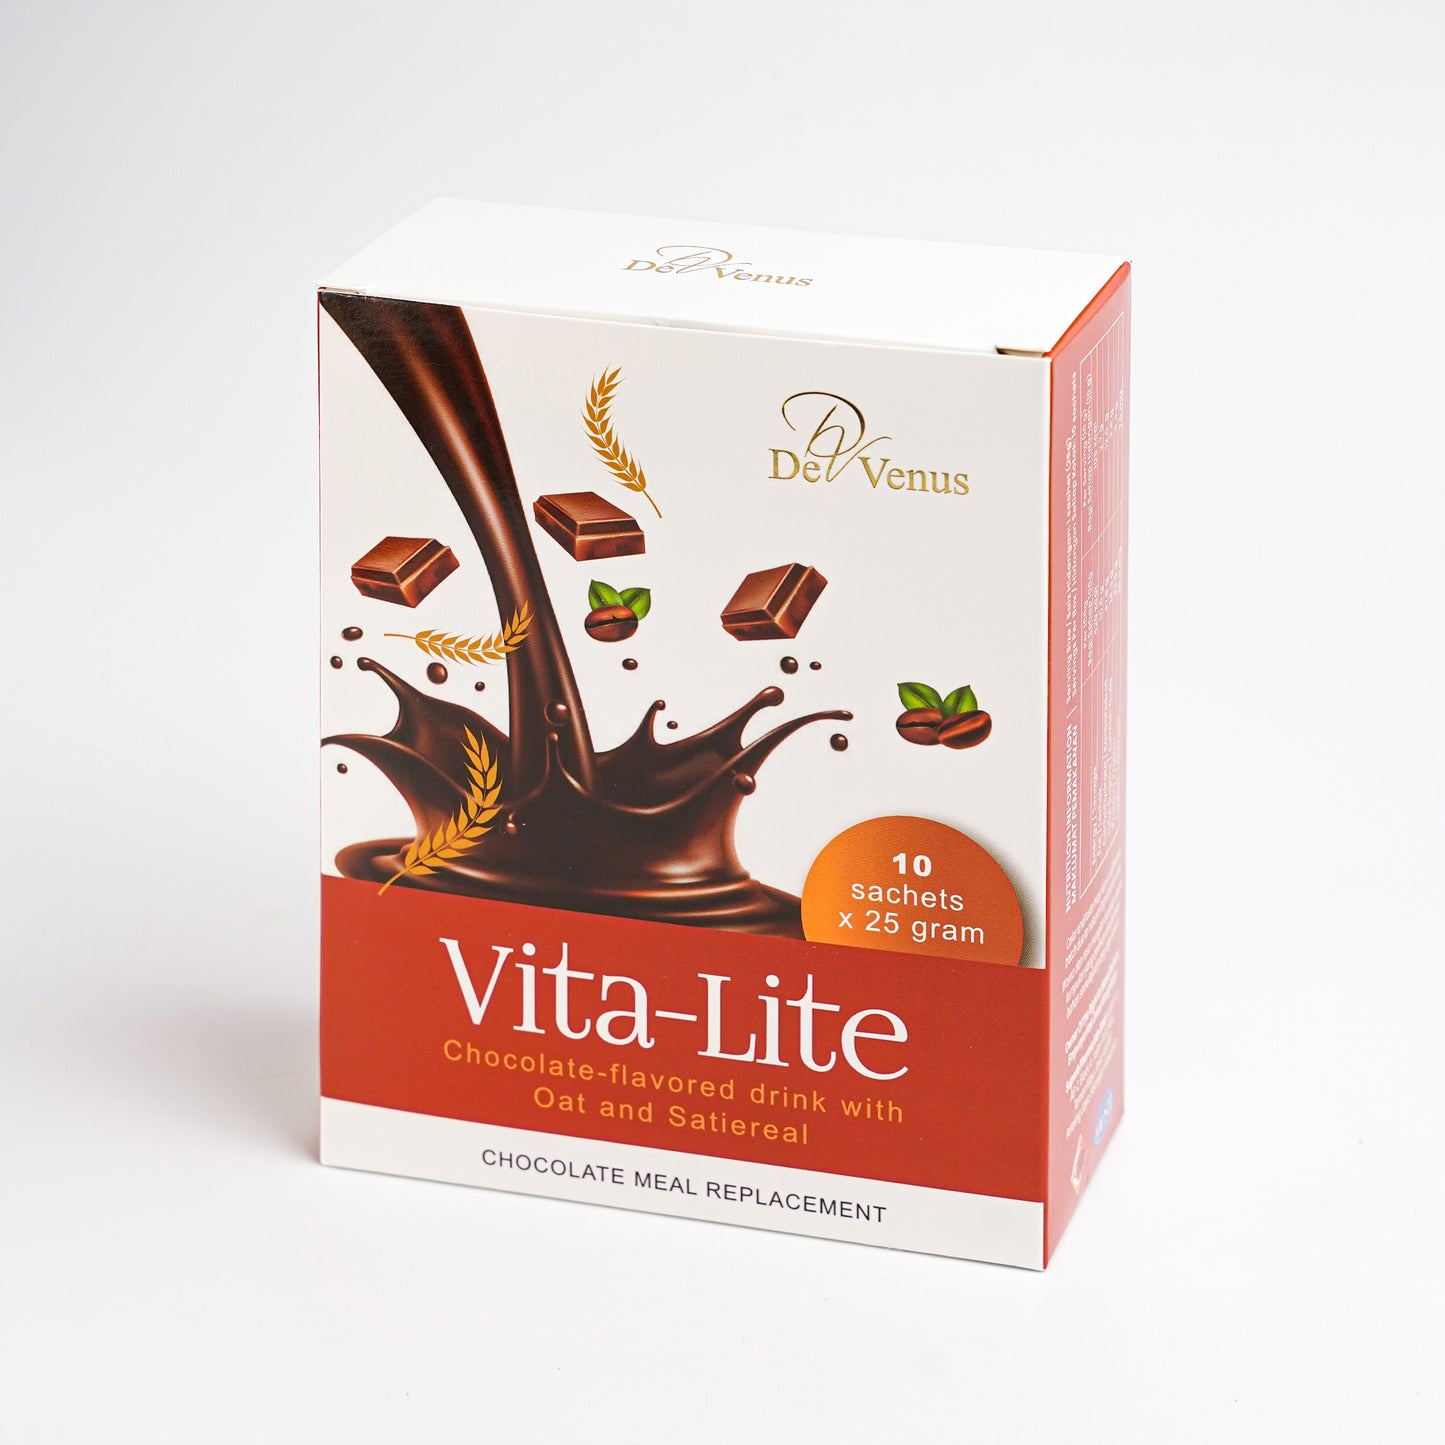 De Venus Vita-Lite Chocolate Meal Replacement x 10 Sachets